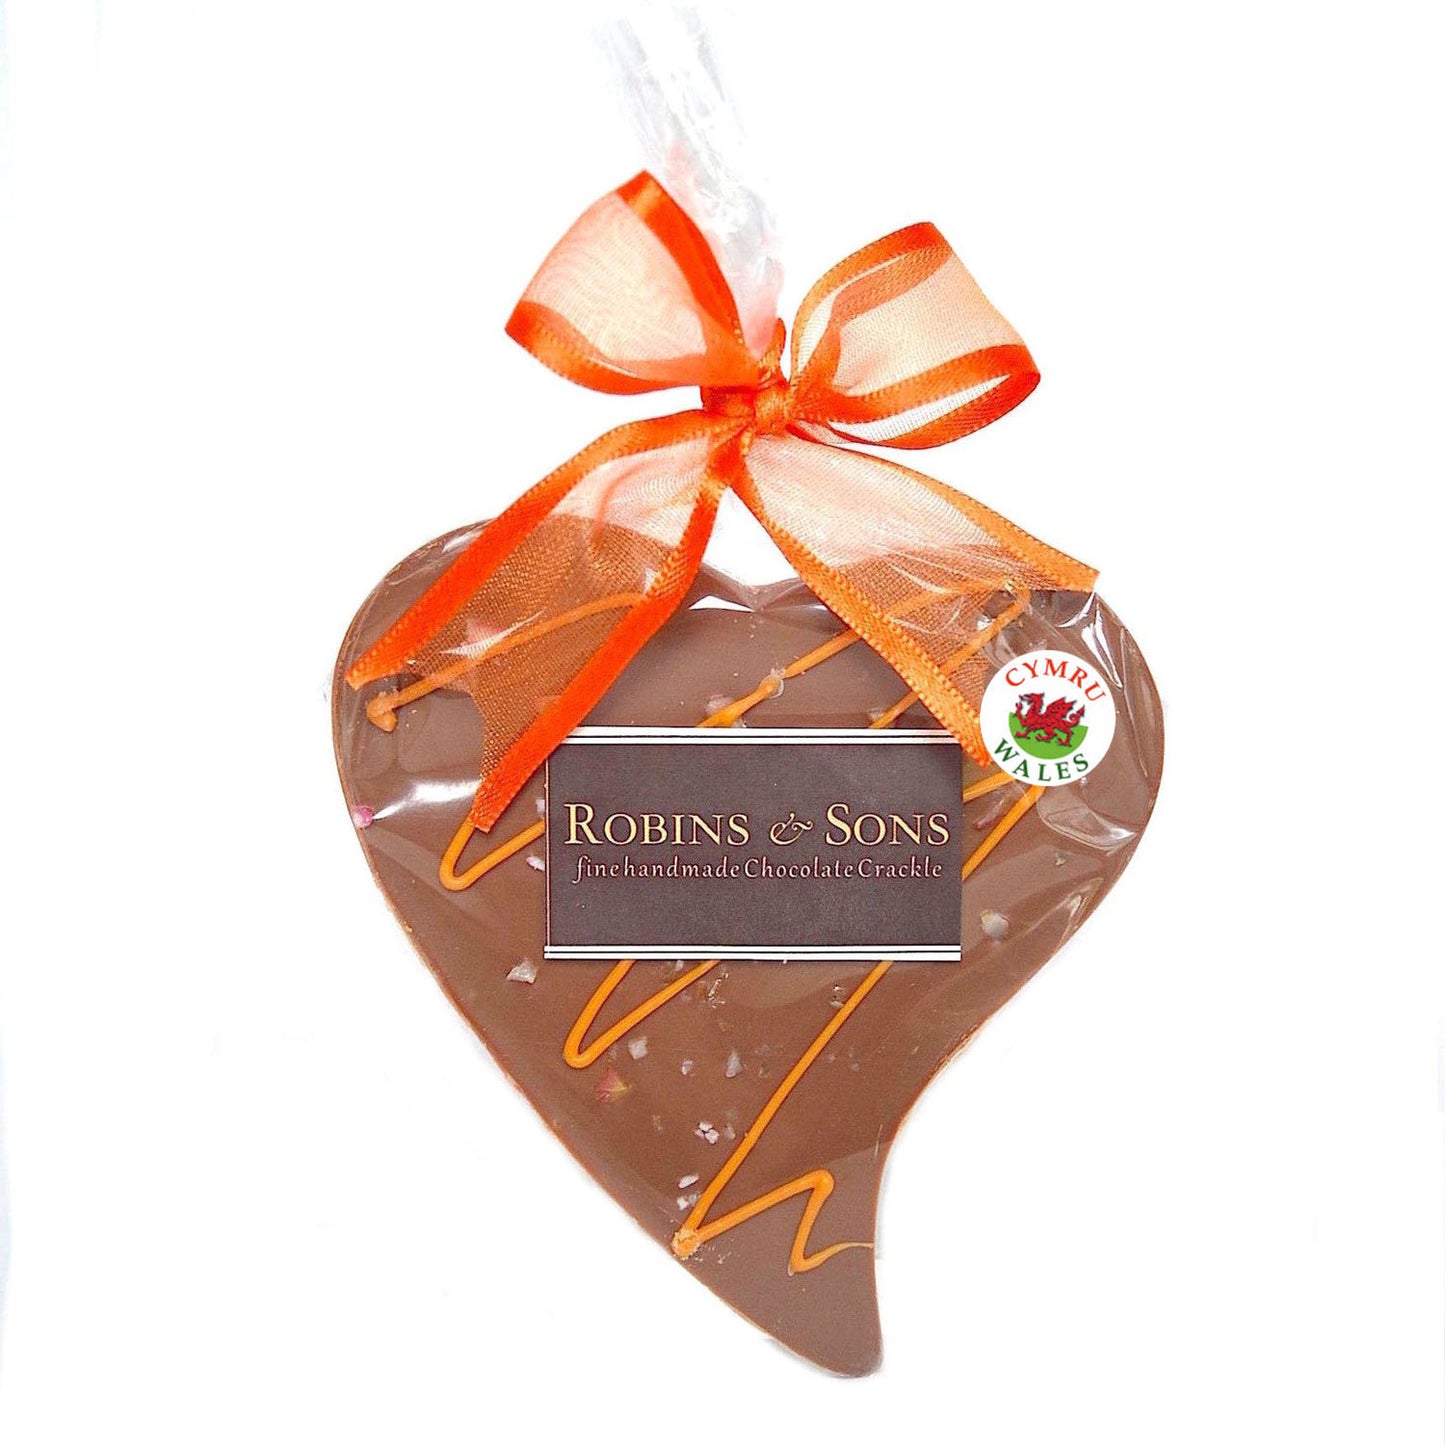 Chocolate Heart - Handmade in Wales - Orange Crackle - Milk